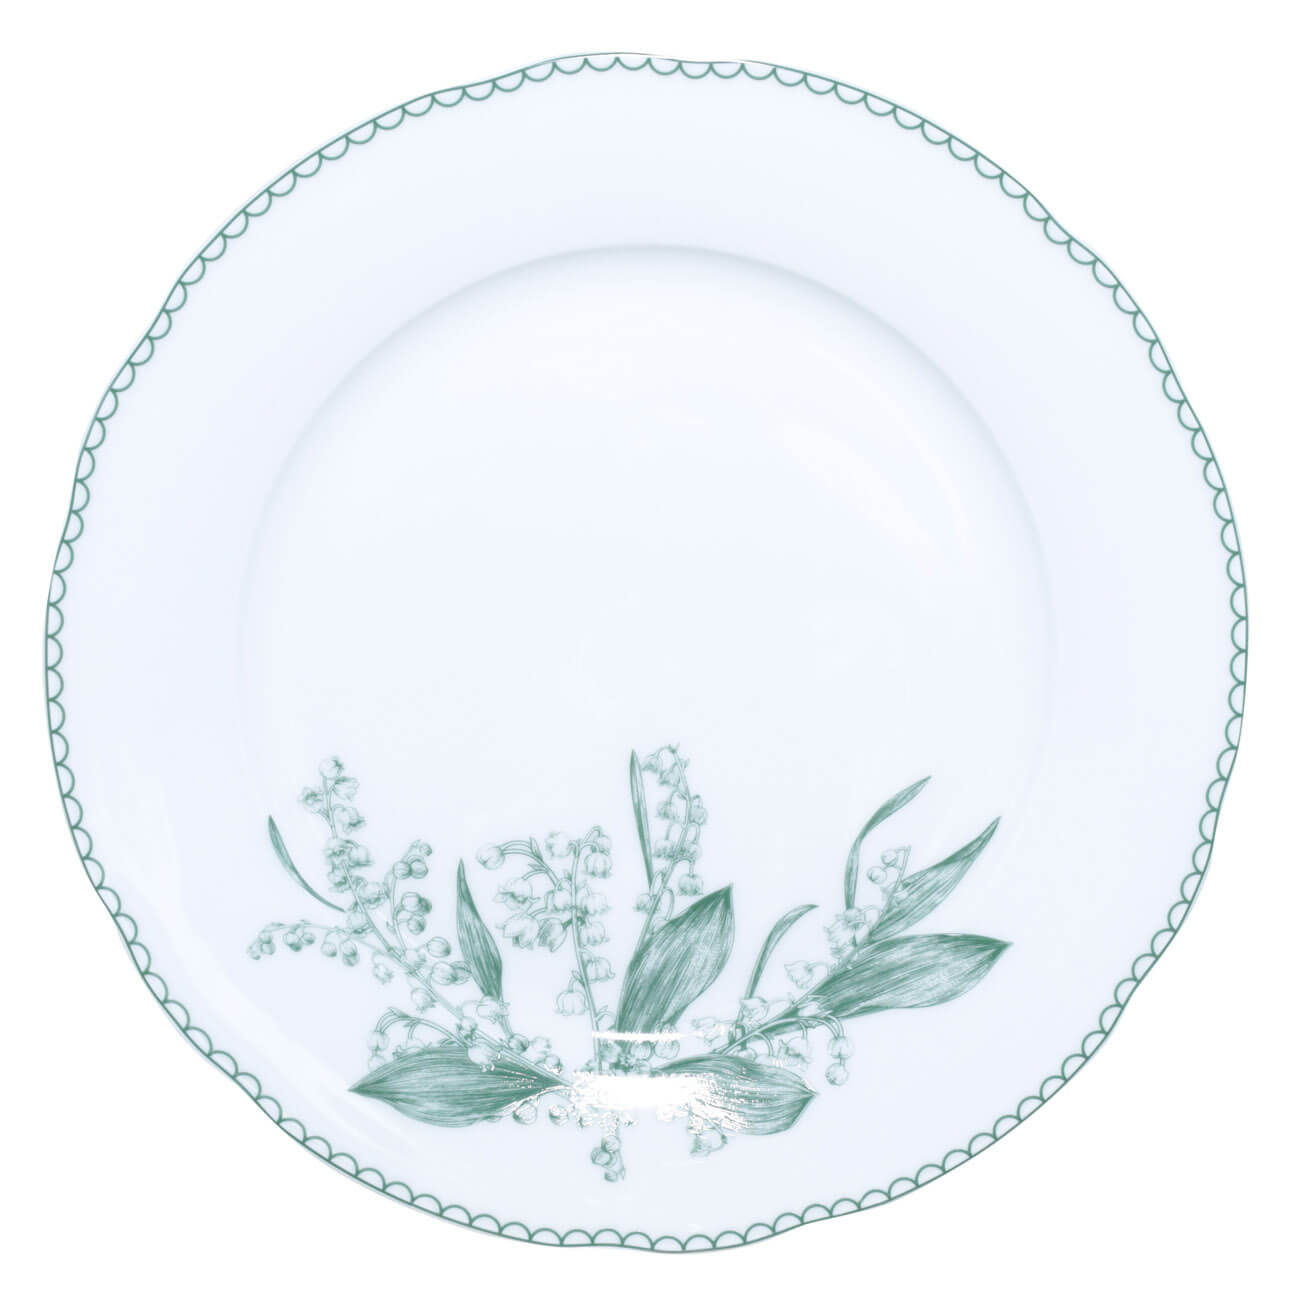 Тарелка обеденная, 27 см, фарфор F, белая, Весенние ландыши, May-lily